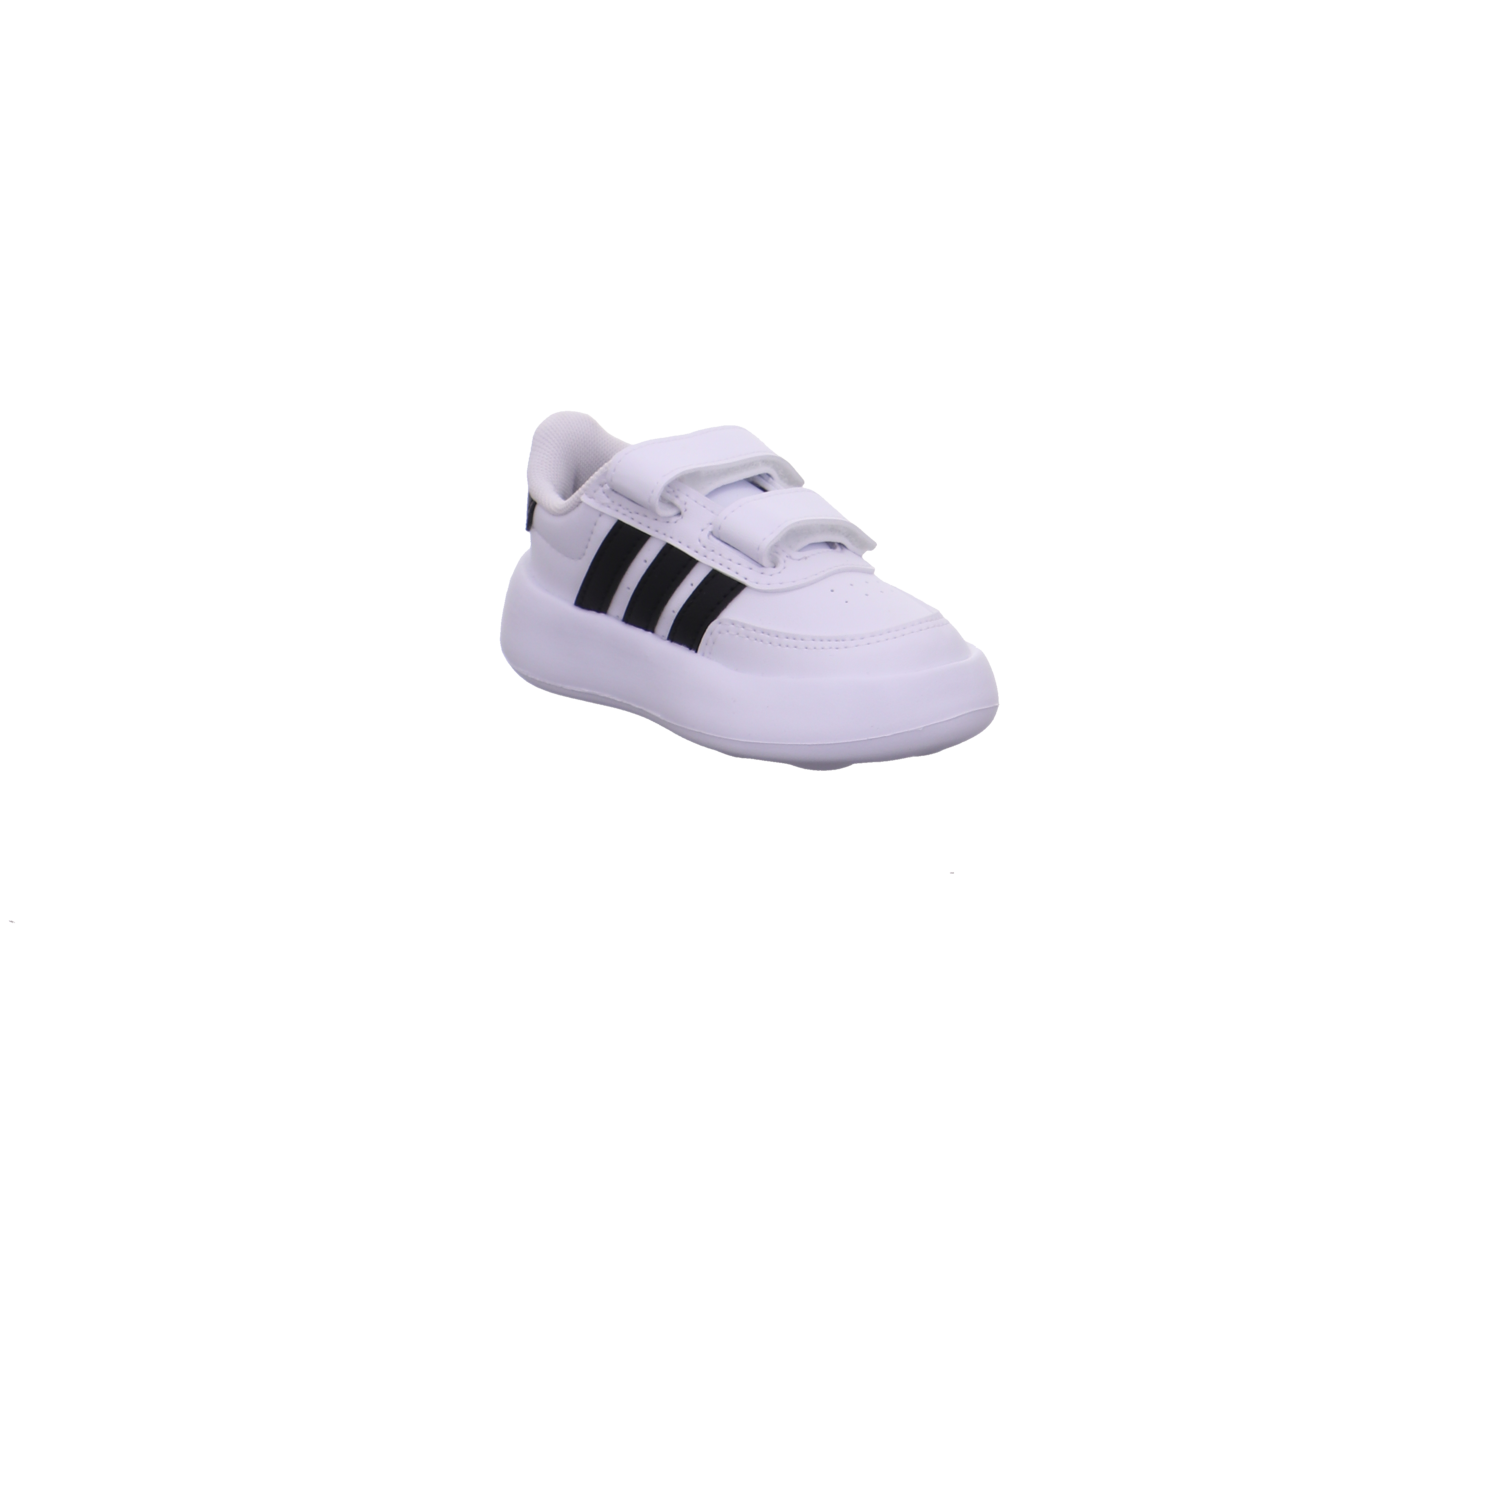 Adidas BREAKNET 2.0 CF I weiß-schwarz Bild7